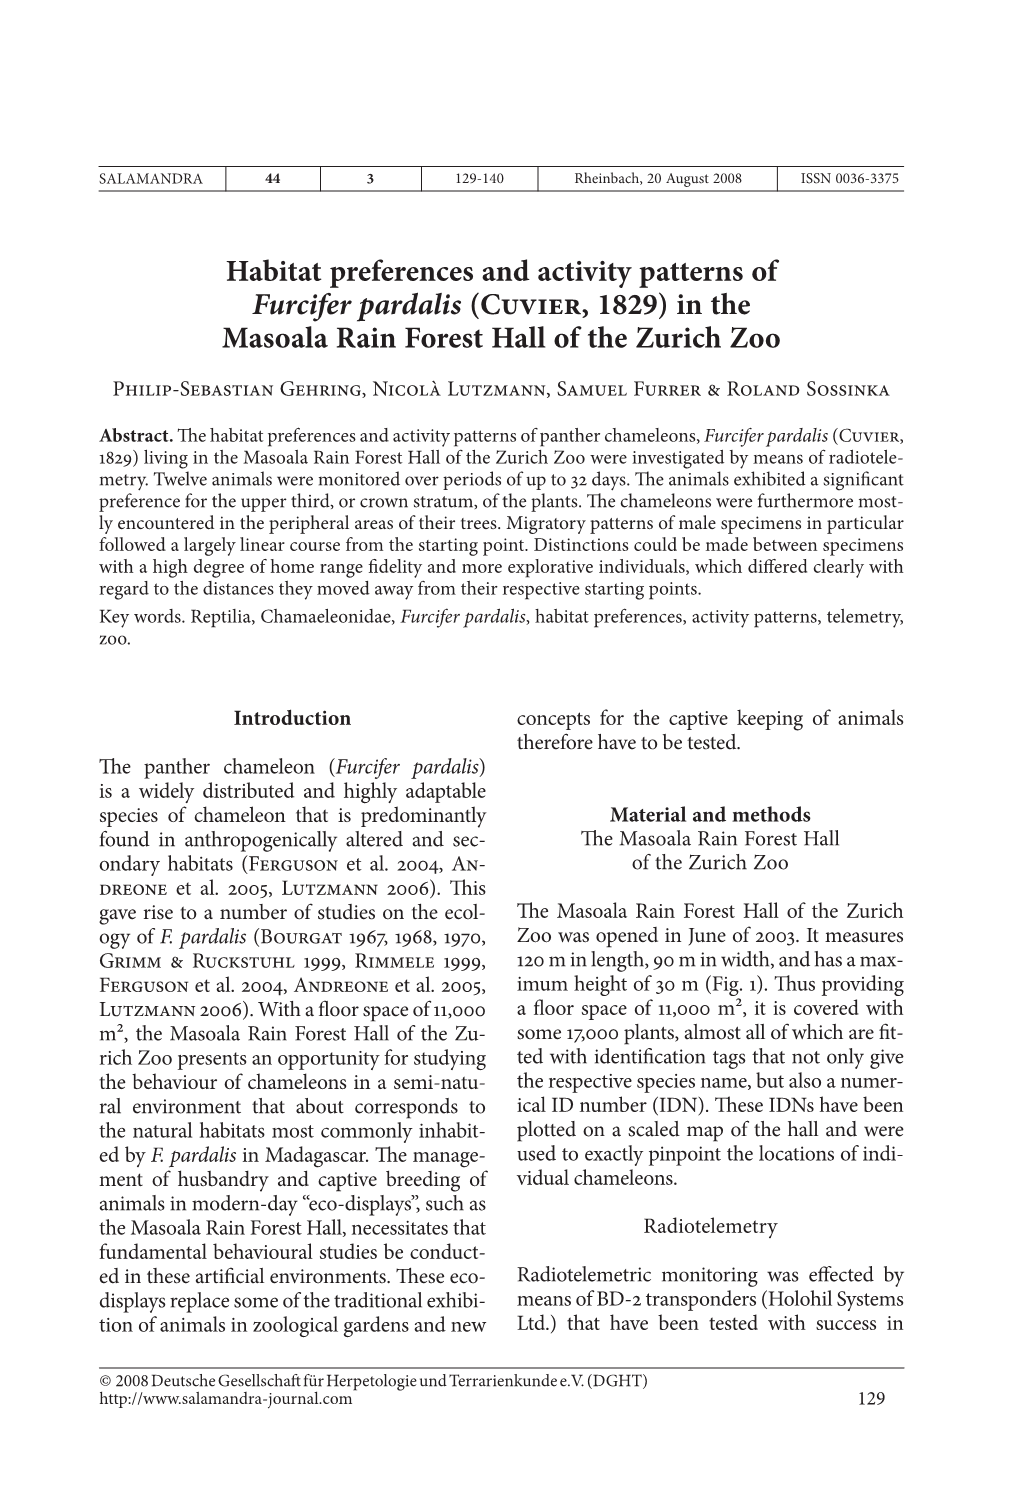 Habitat Preferences and Activity Patterns of Furcifer Pardalis